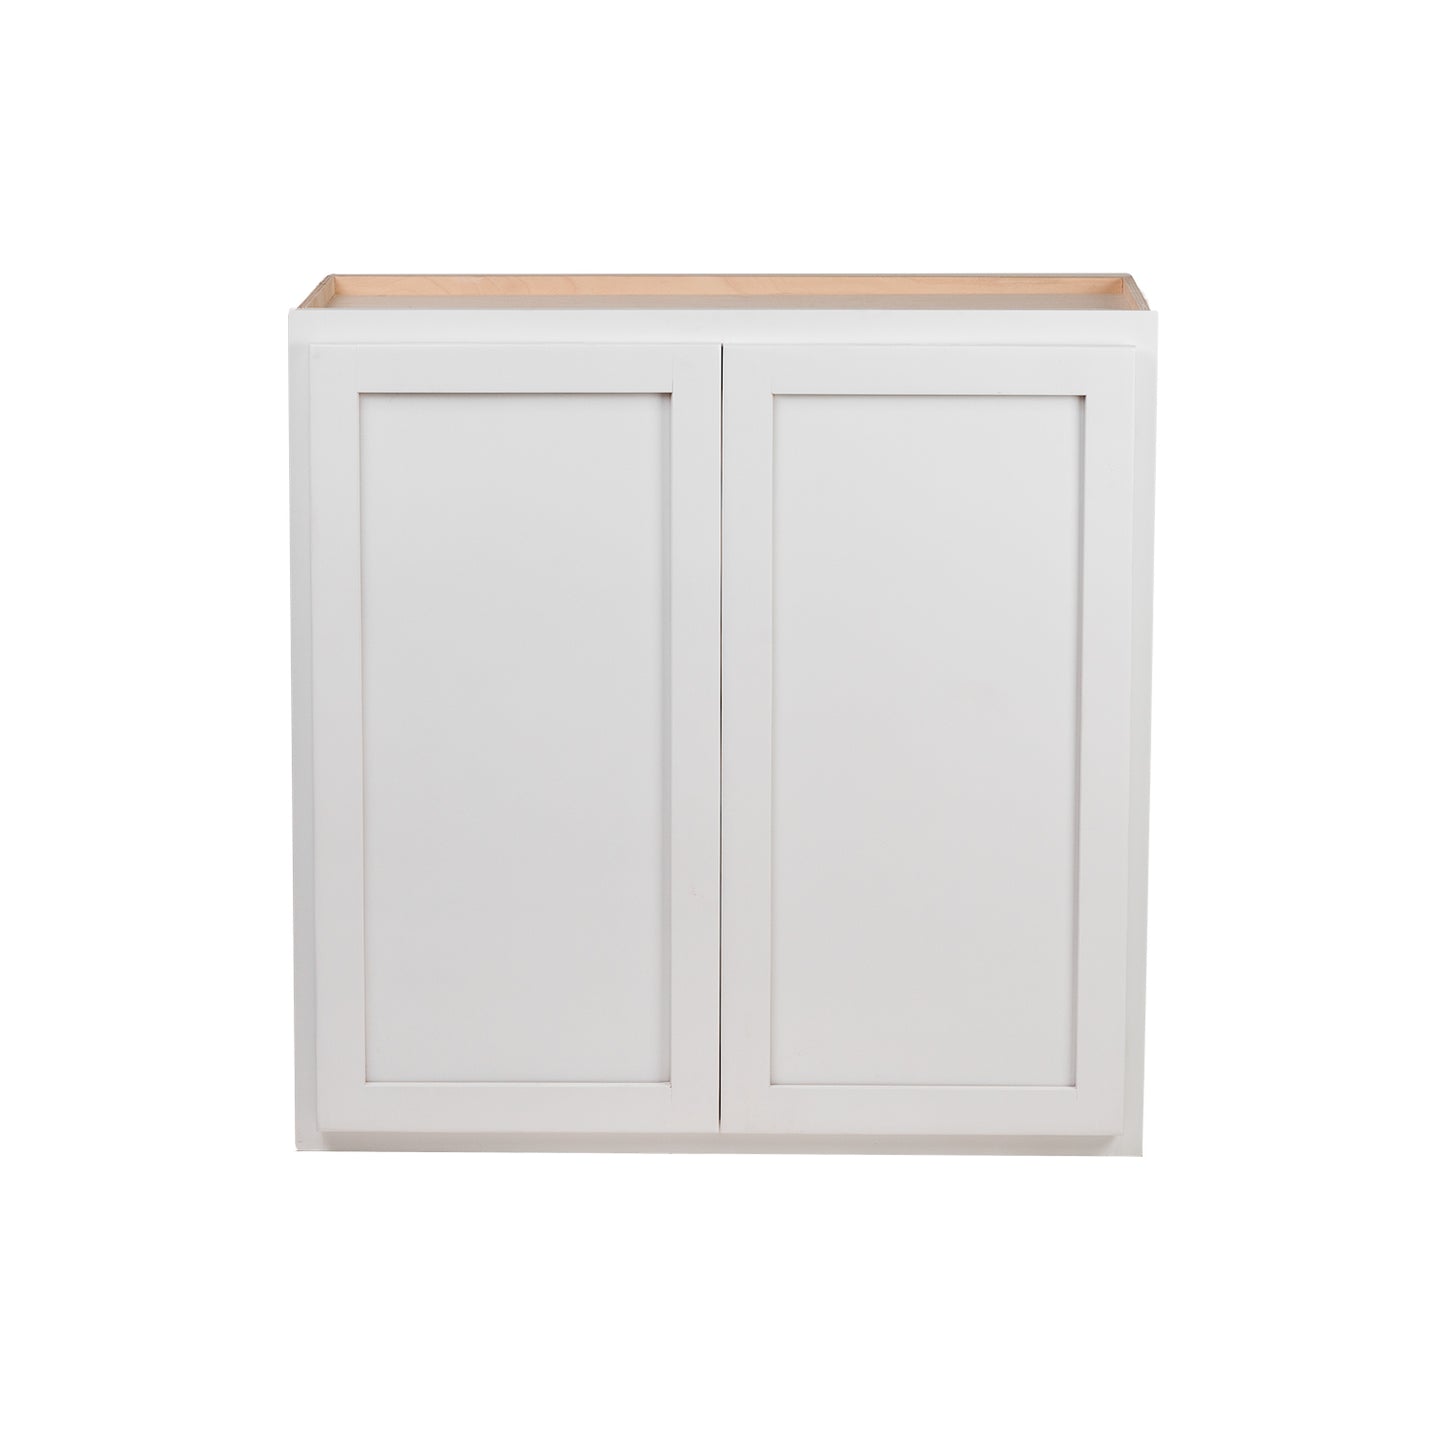 Quicklock RTA (Ready-to-Assemble) Pure White 30"Wx42"Hx12"D Wall Cabinet